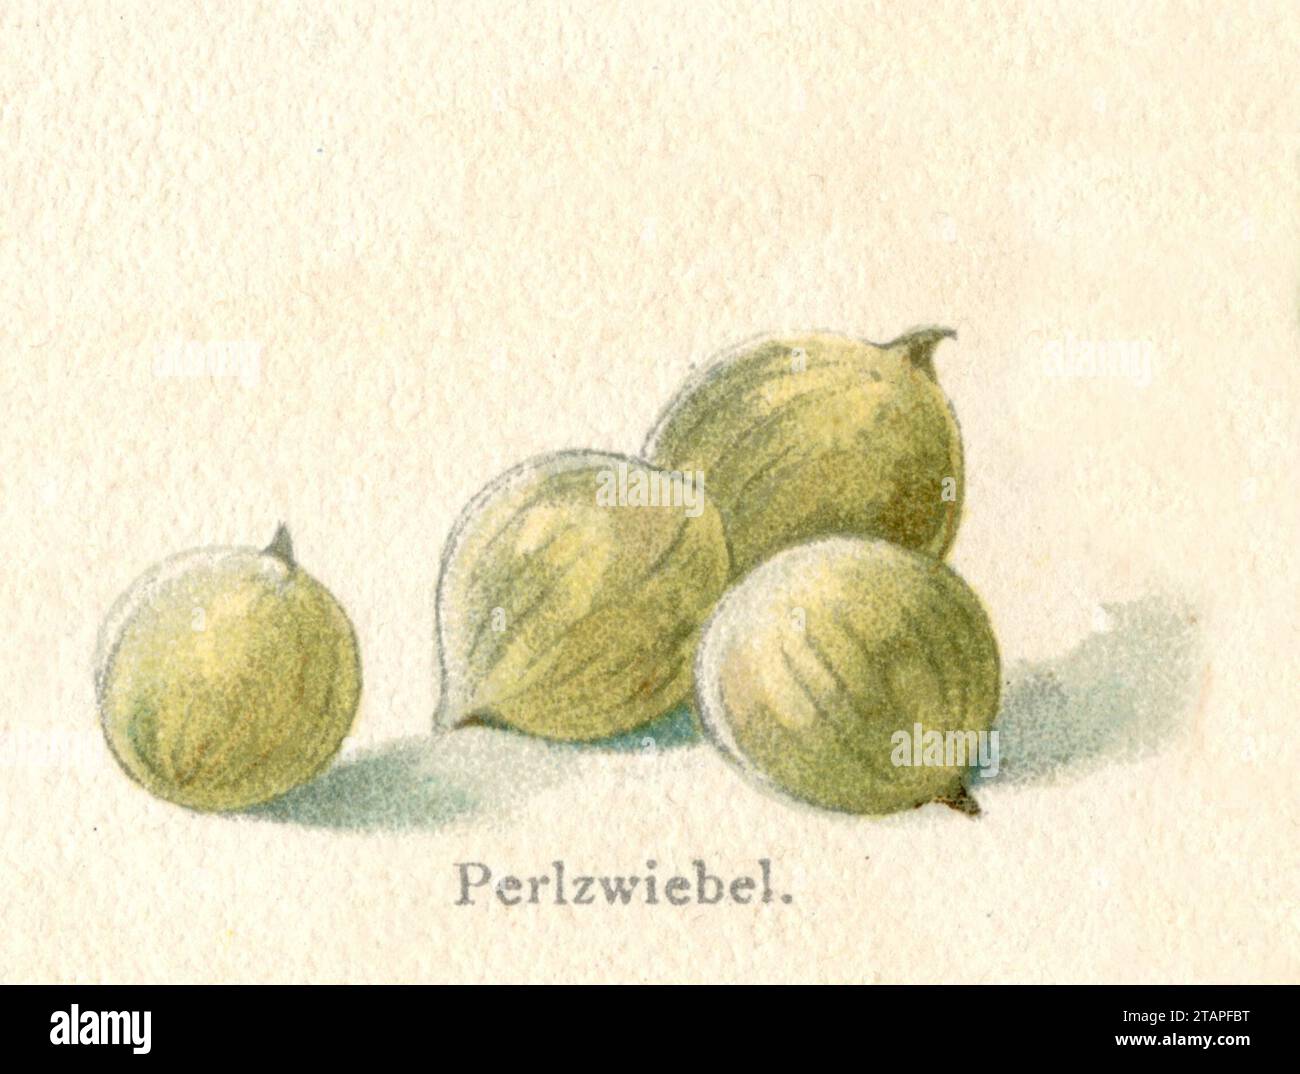 broadleaf wild leek, pearl onions Allium ampeloprasum,  (agricultural book, 1902), Acker-Lauch, Perlzwiebeln Stock Photo